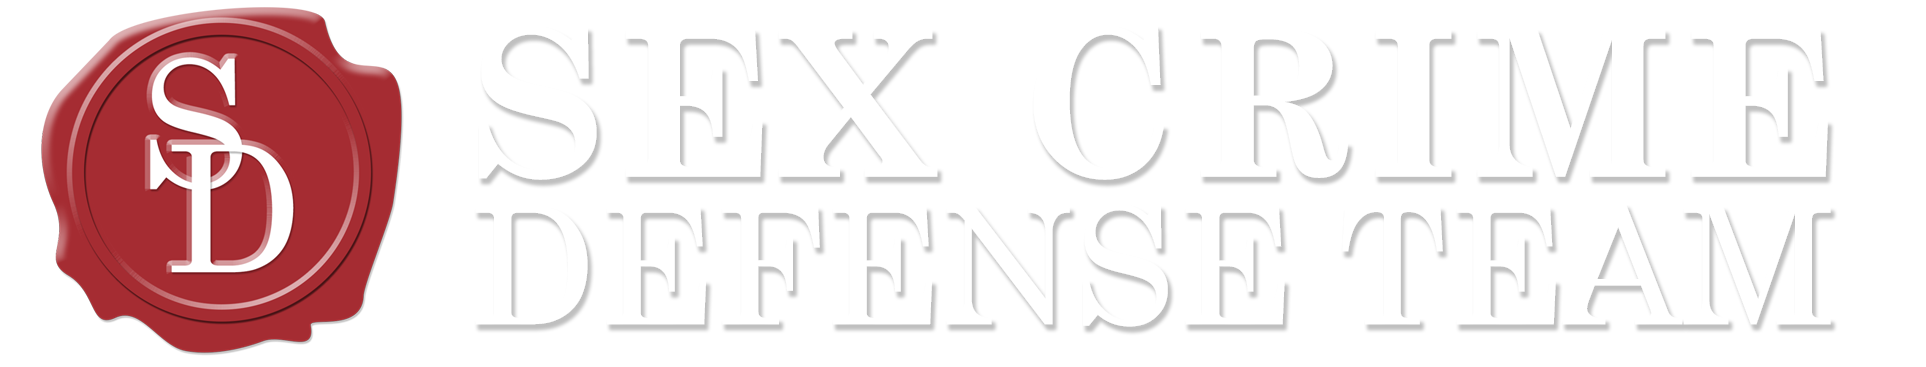 Sex Crime Defense Team Logo